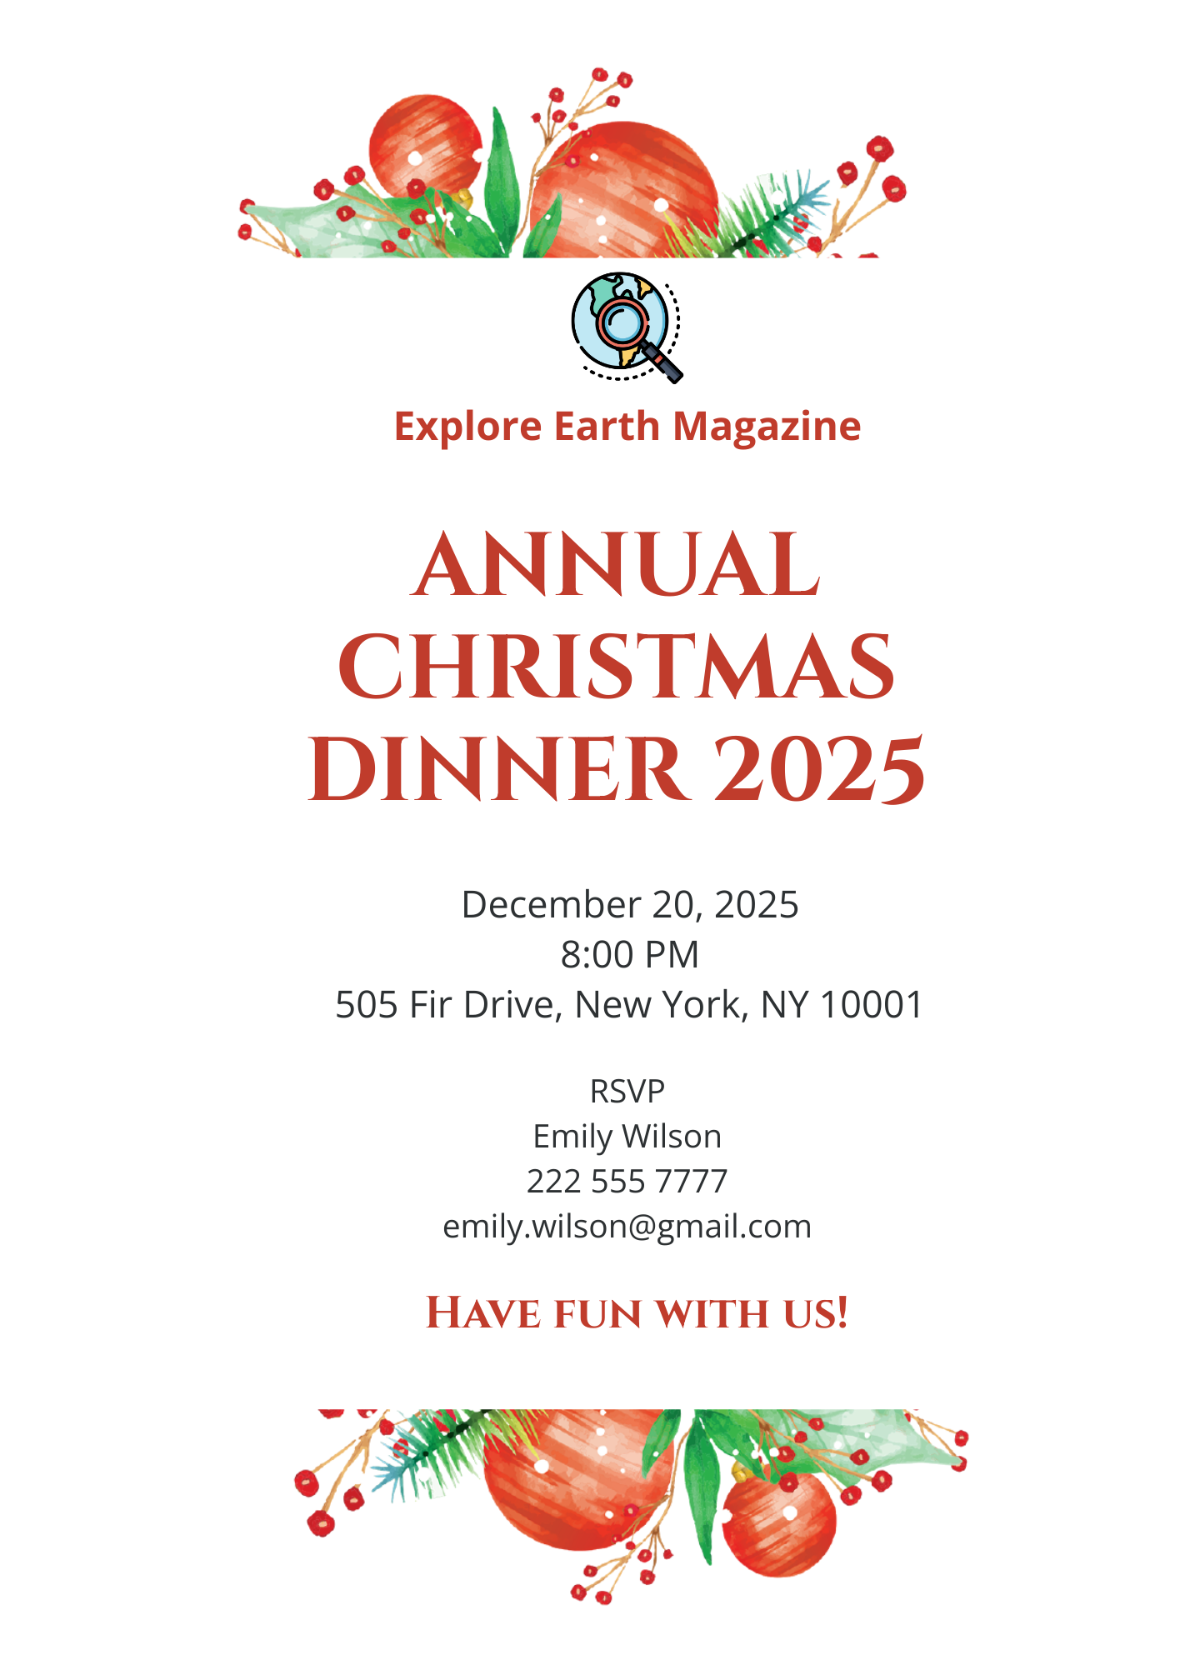 Corporate Christmas Dinner Invitation